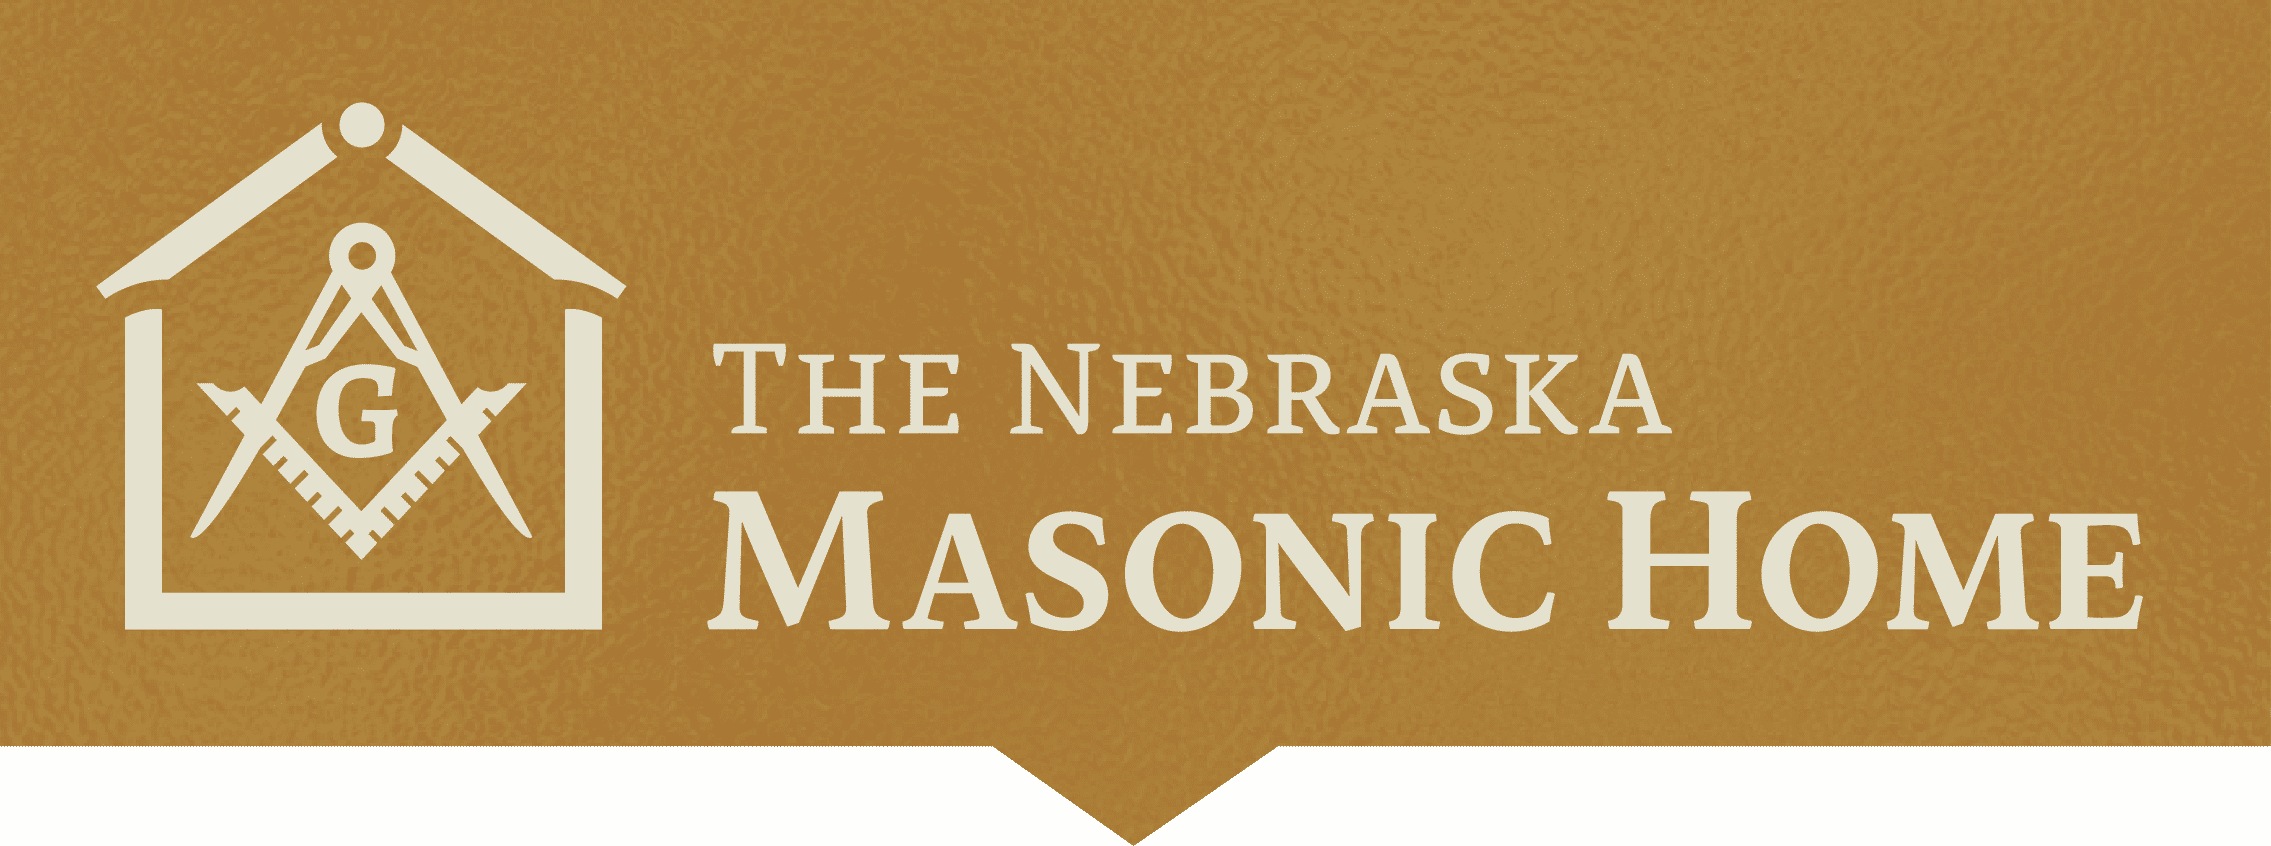 The Nebraska Masonic Home